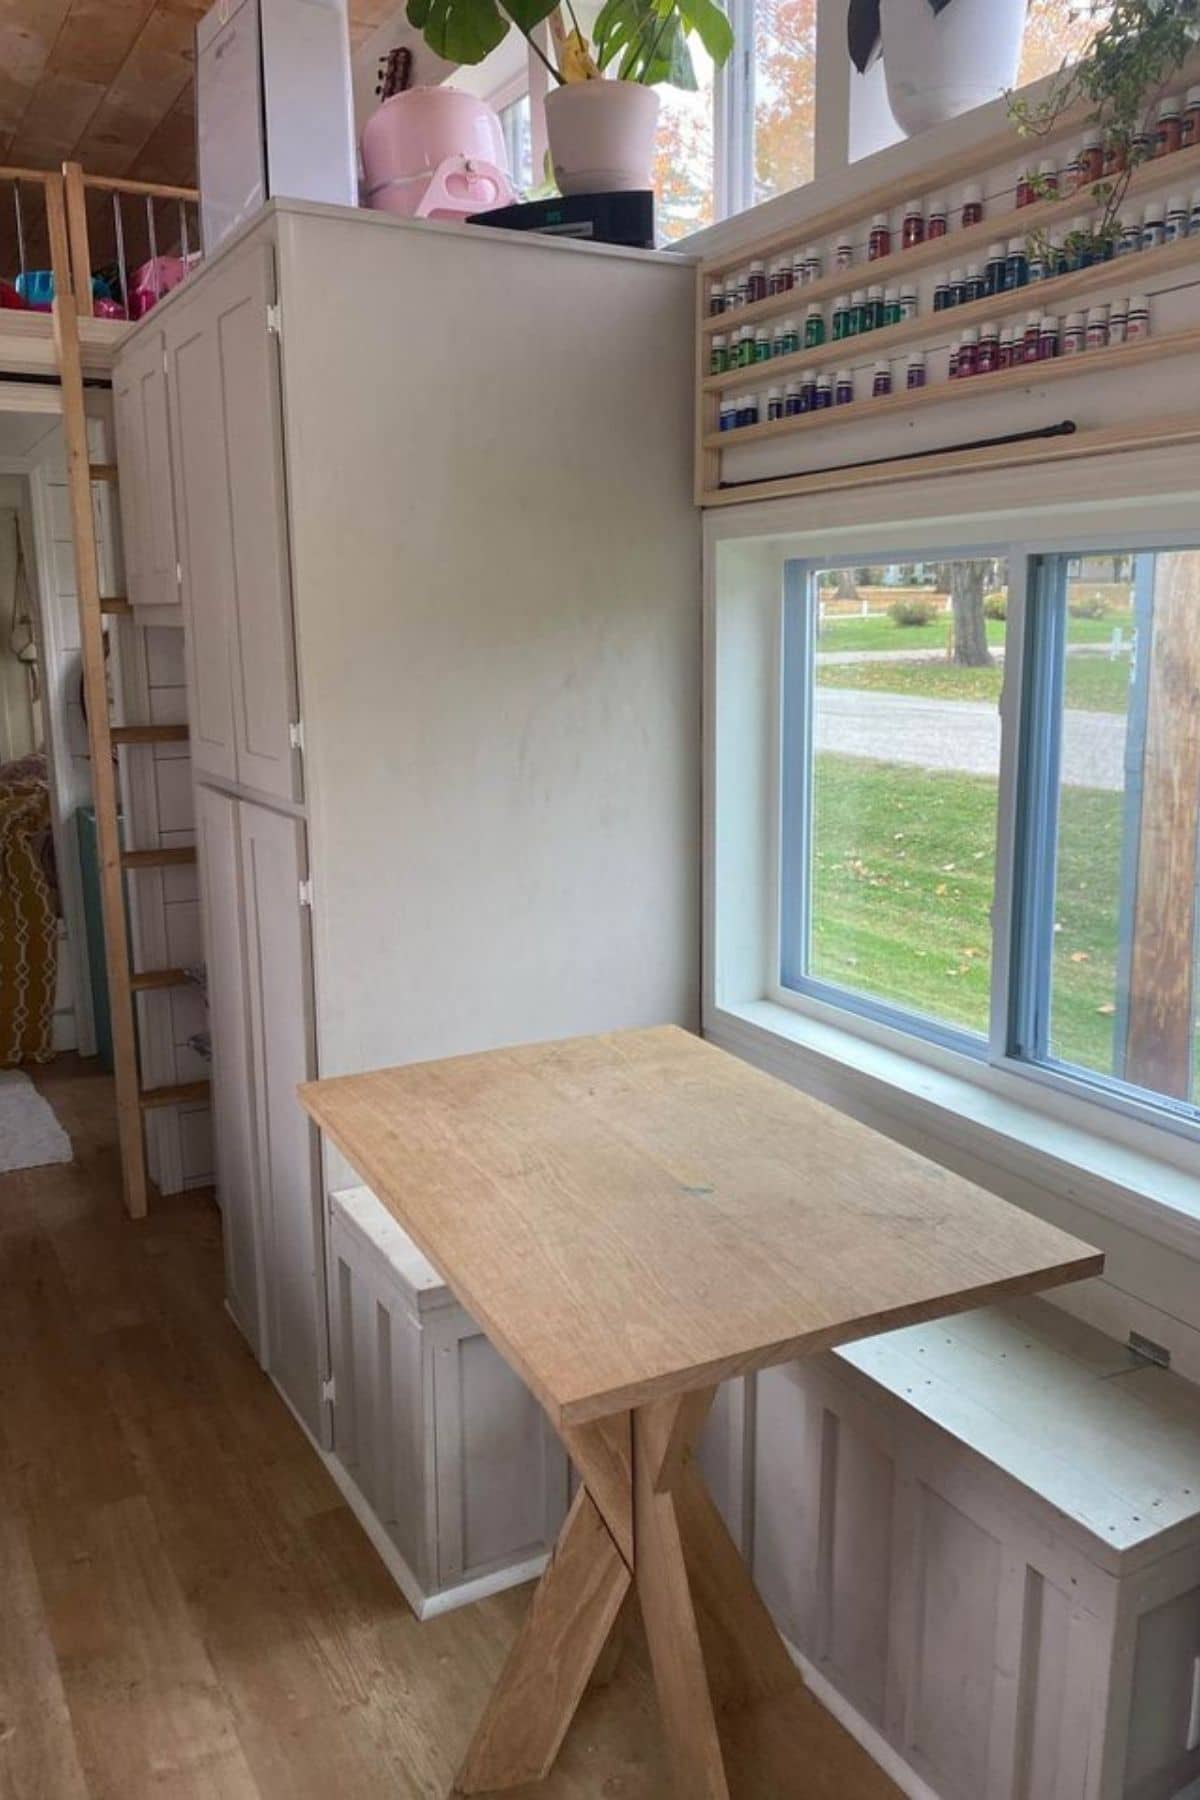 blonde wood table underneath window next to pantry